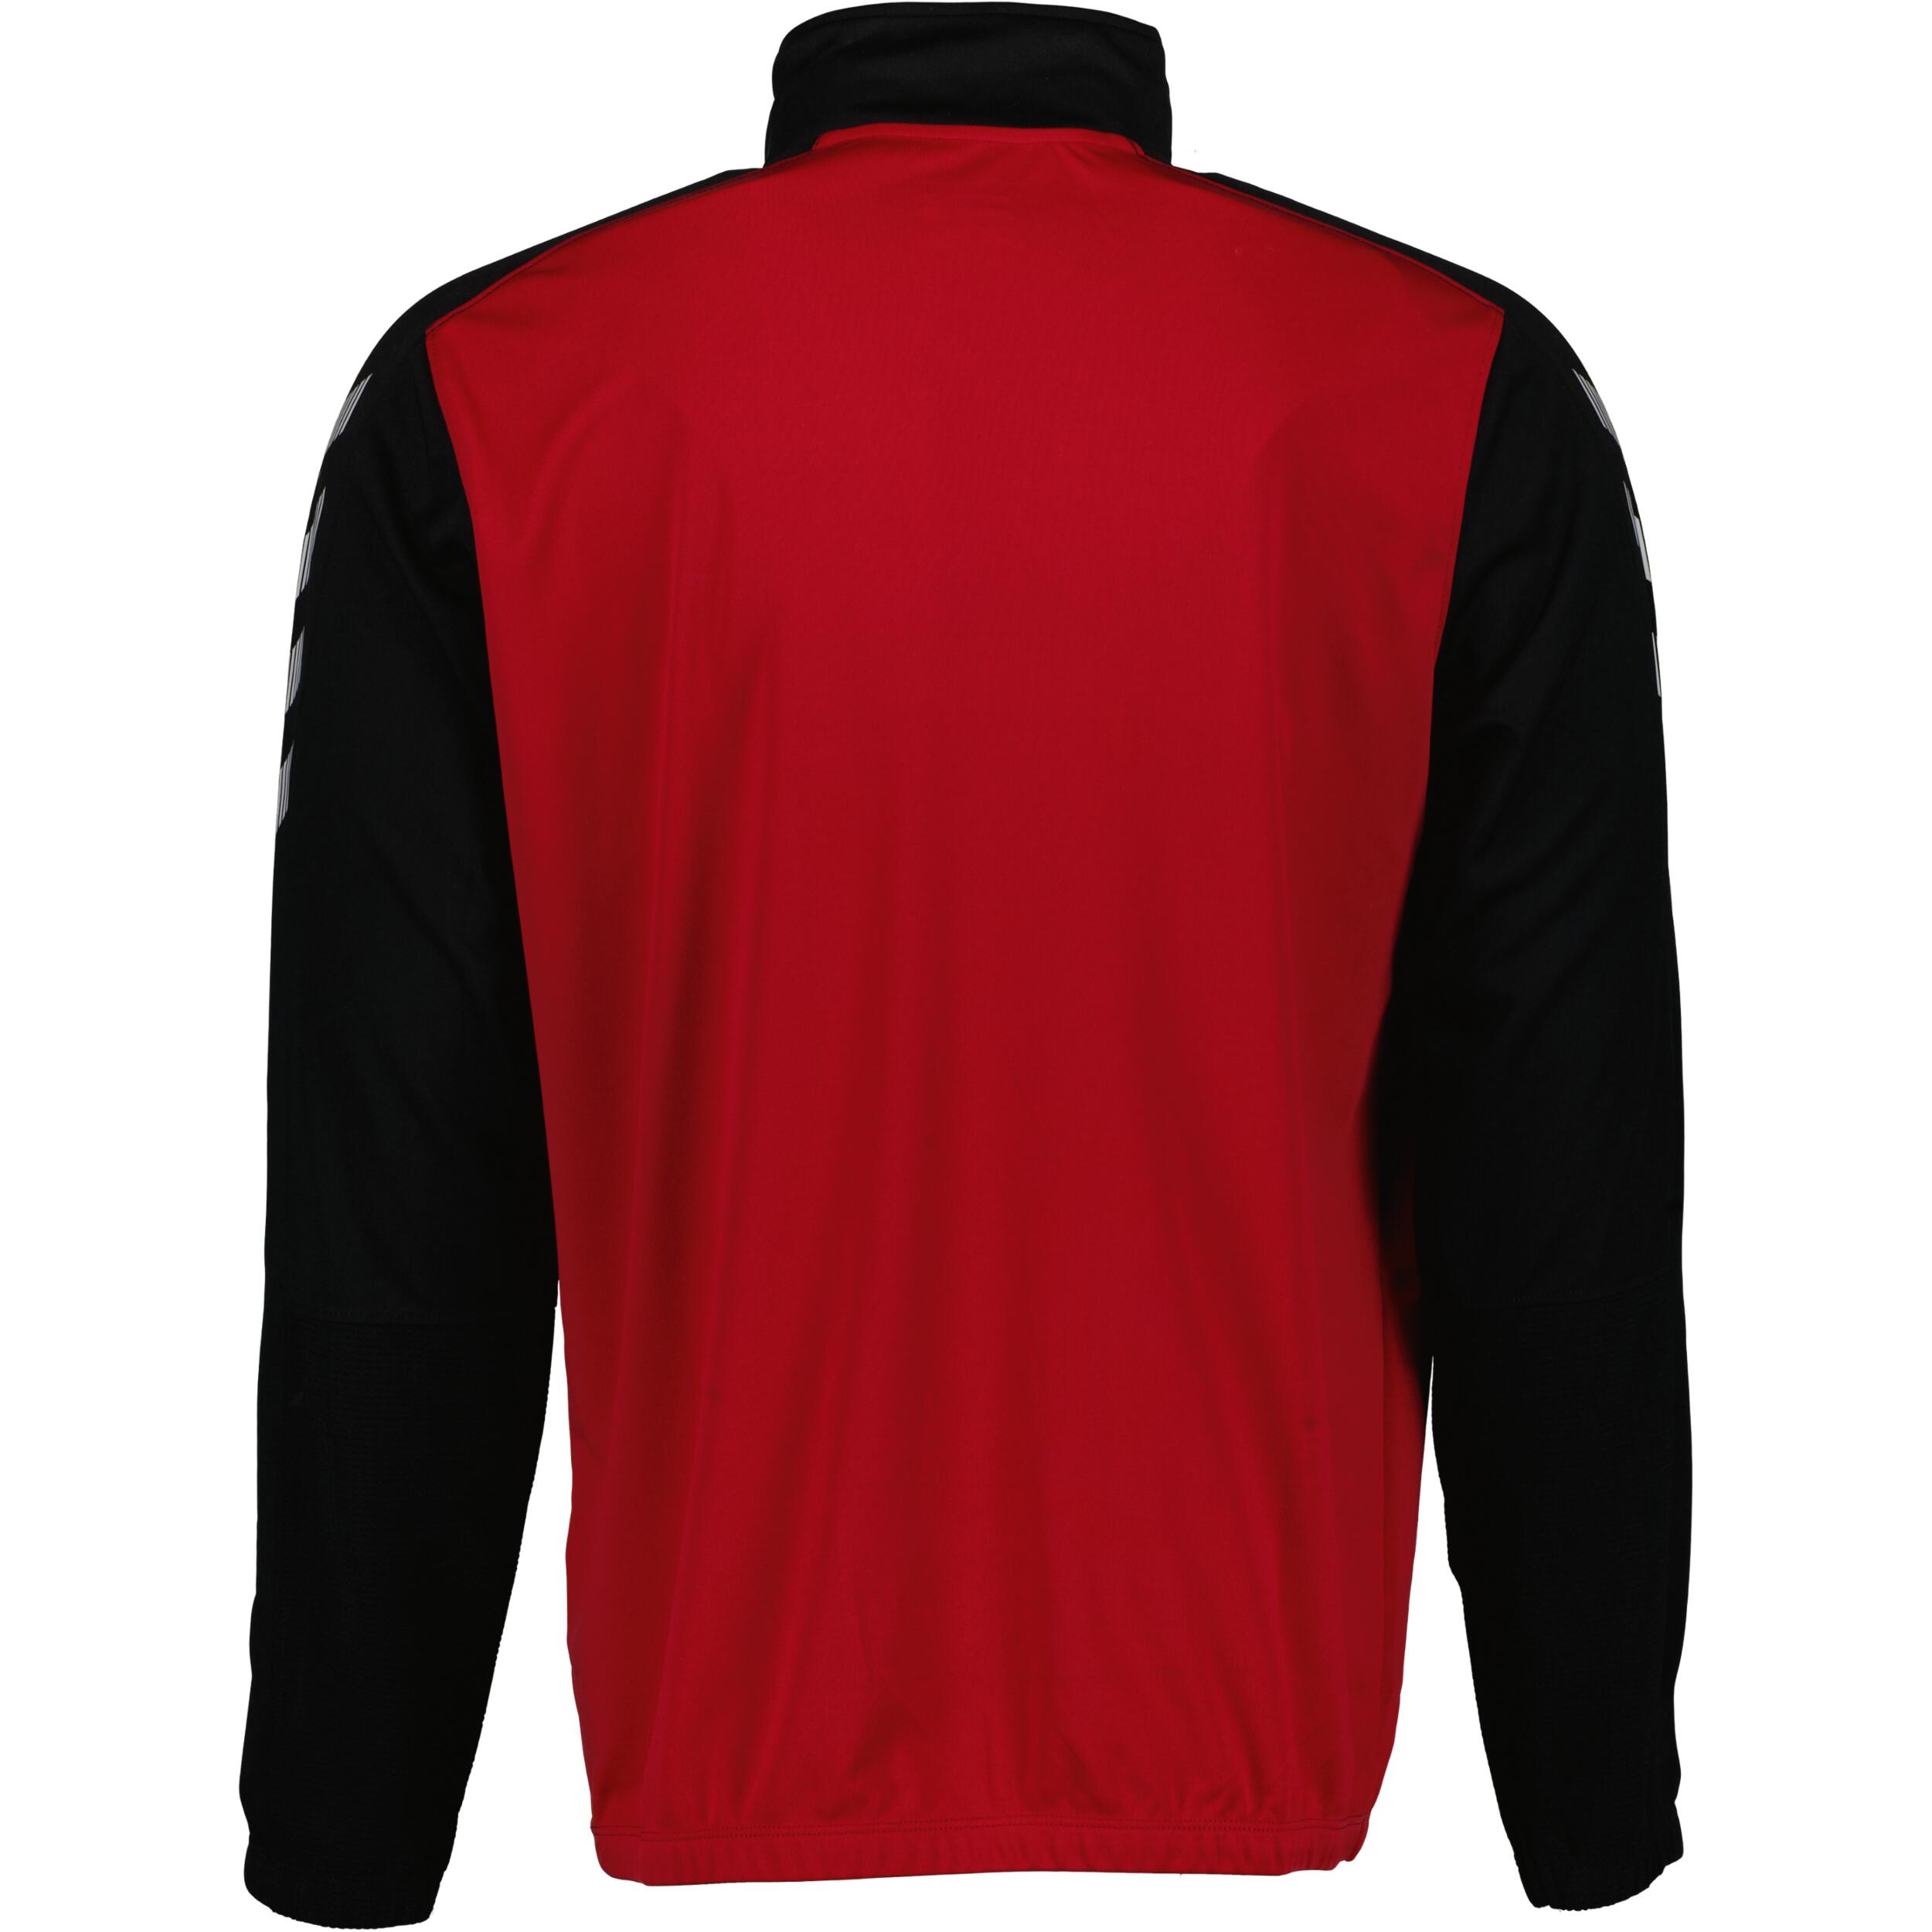 Half zip sweat for men, great for football, in true red/black 2/3